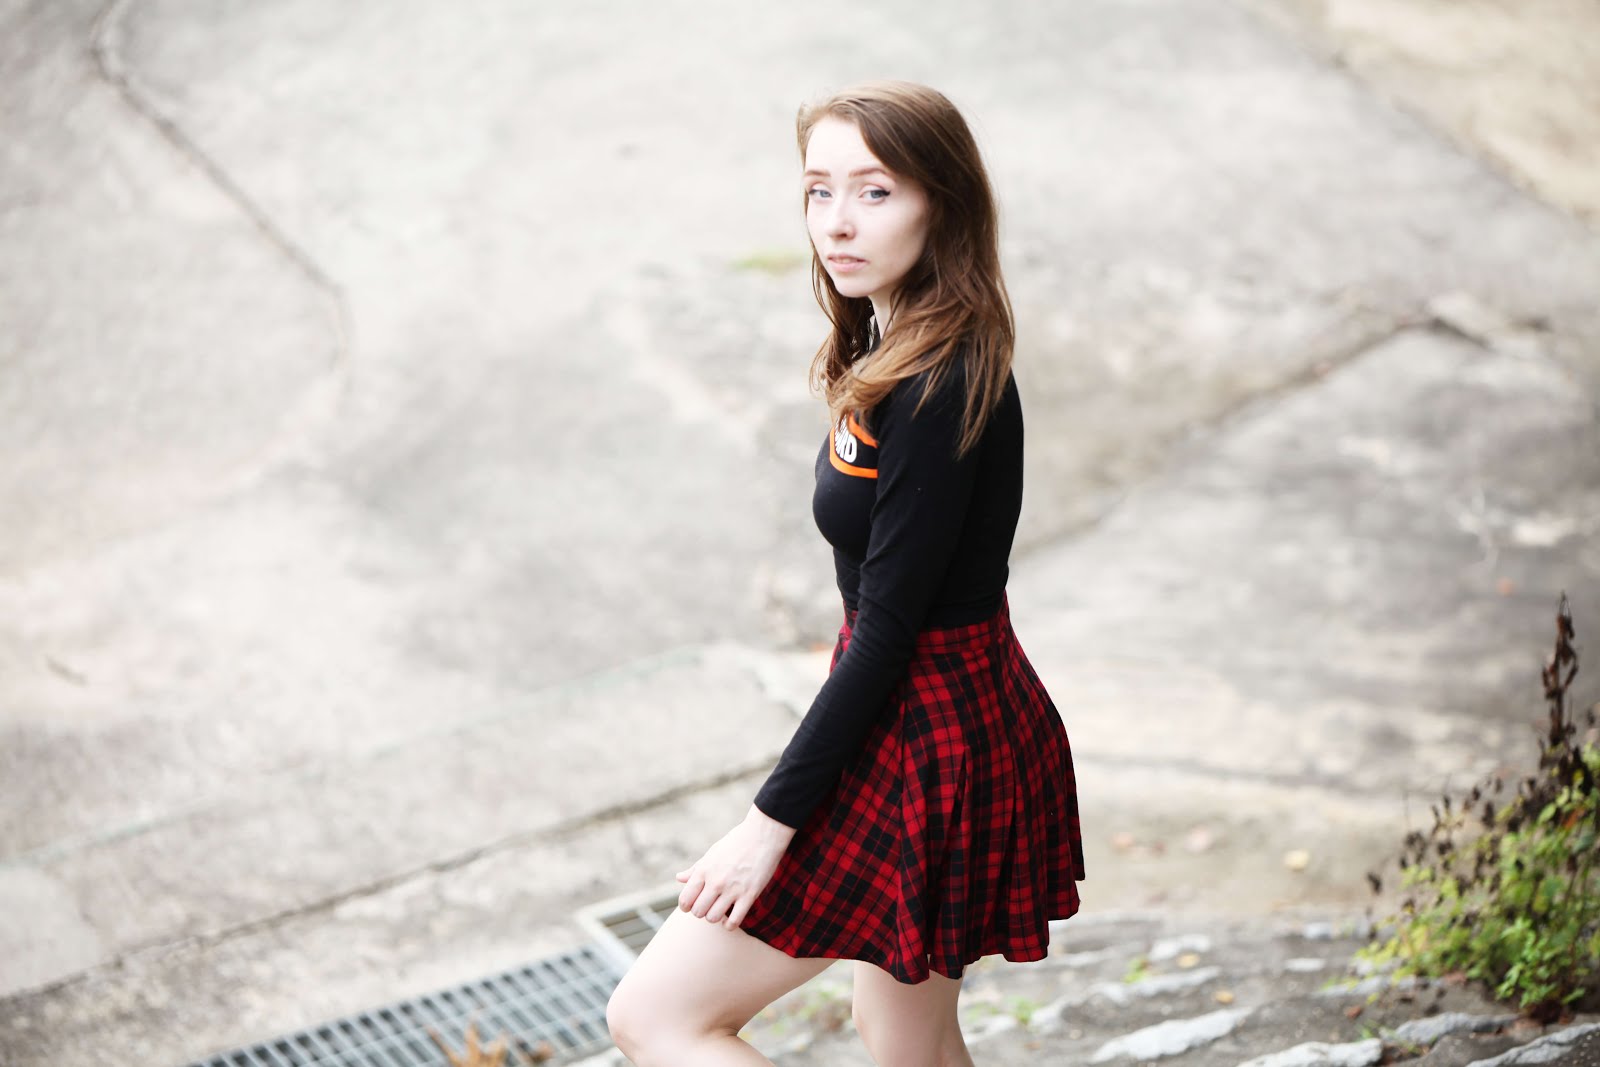 grunge tennis skirt outfit seoul fashion blogger disused theme park photoshoot